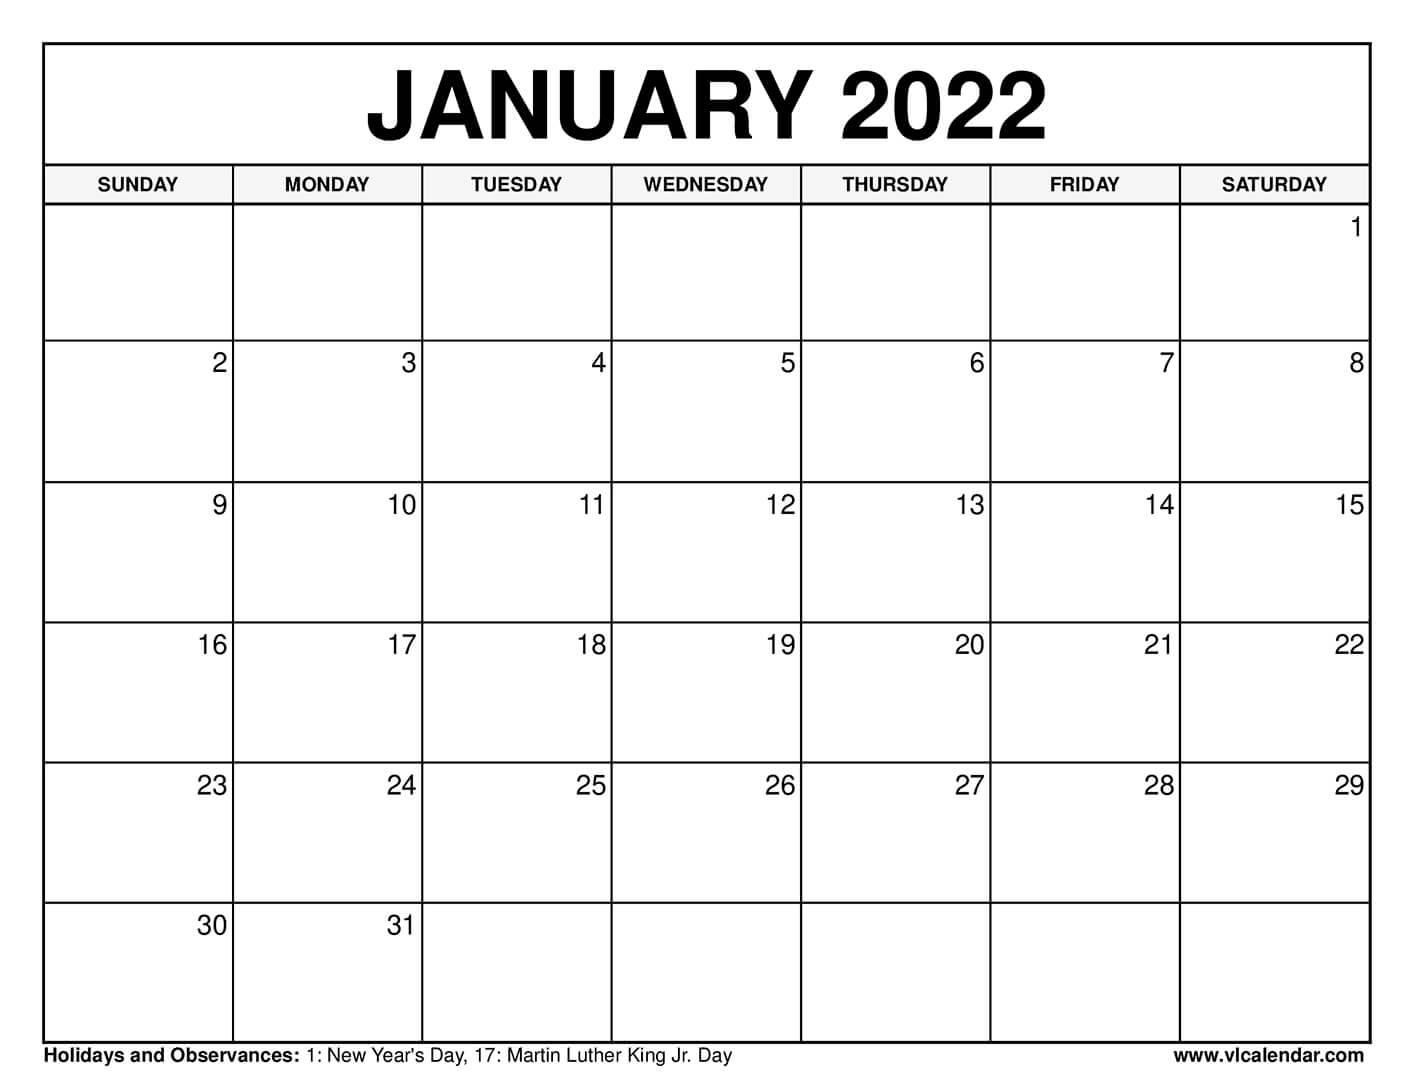 January 2022 Schedule Printable January 2022 Calendar Templates With Holidays - Vl Calendar